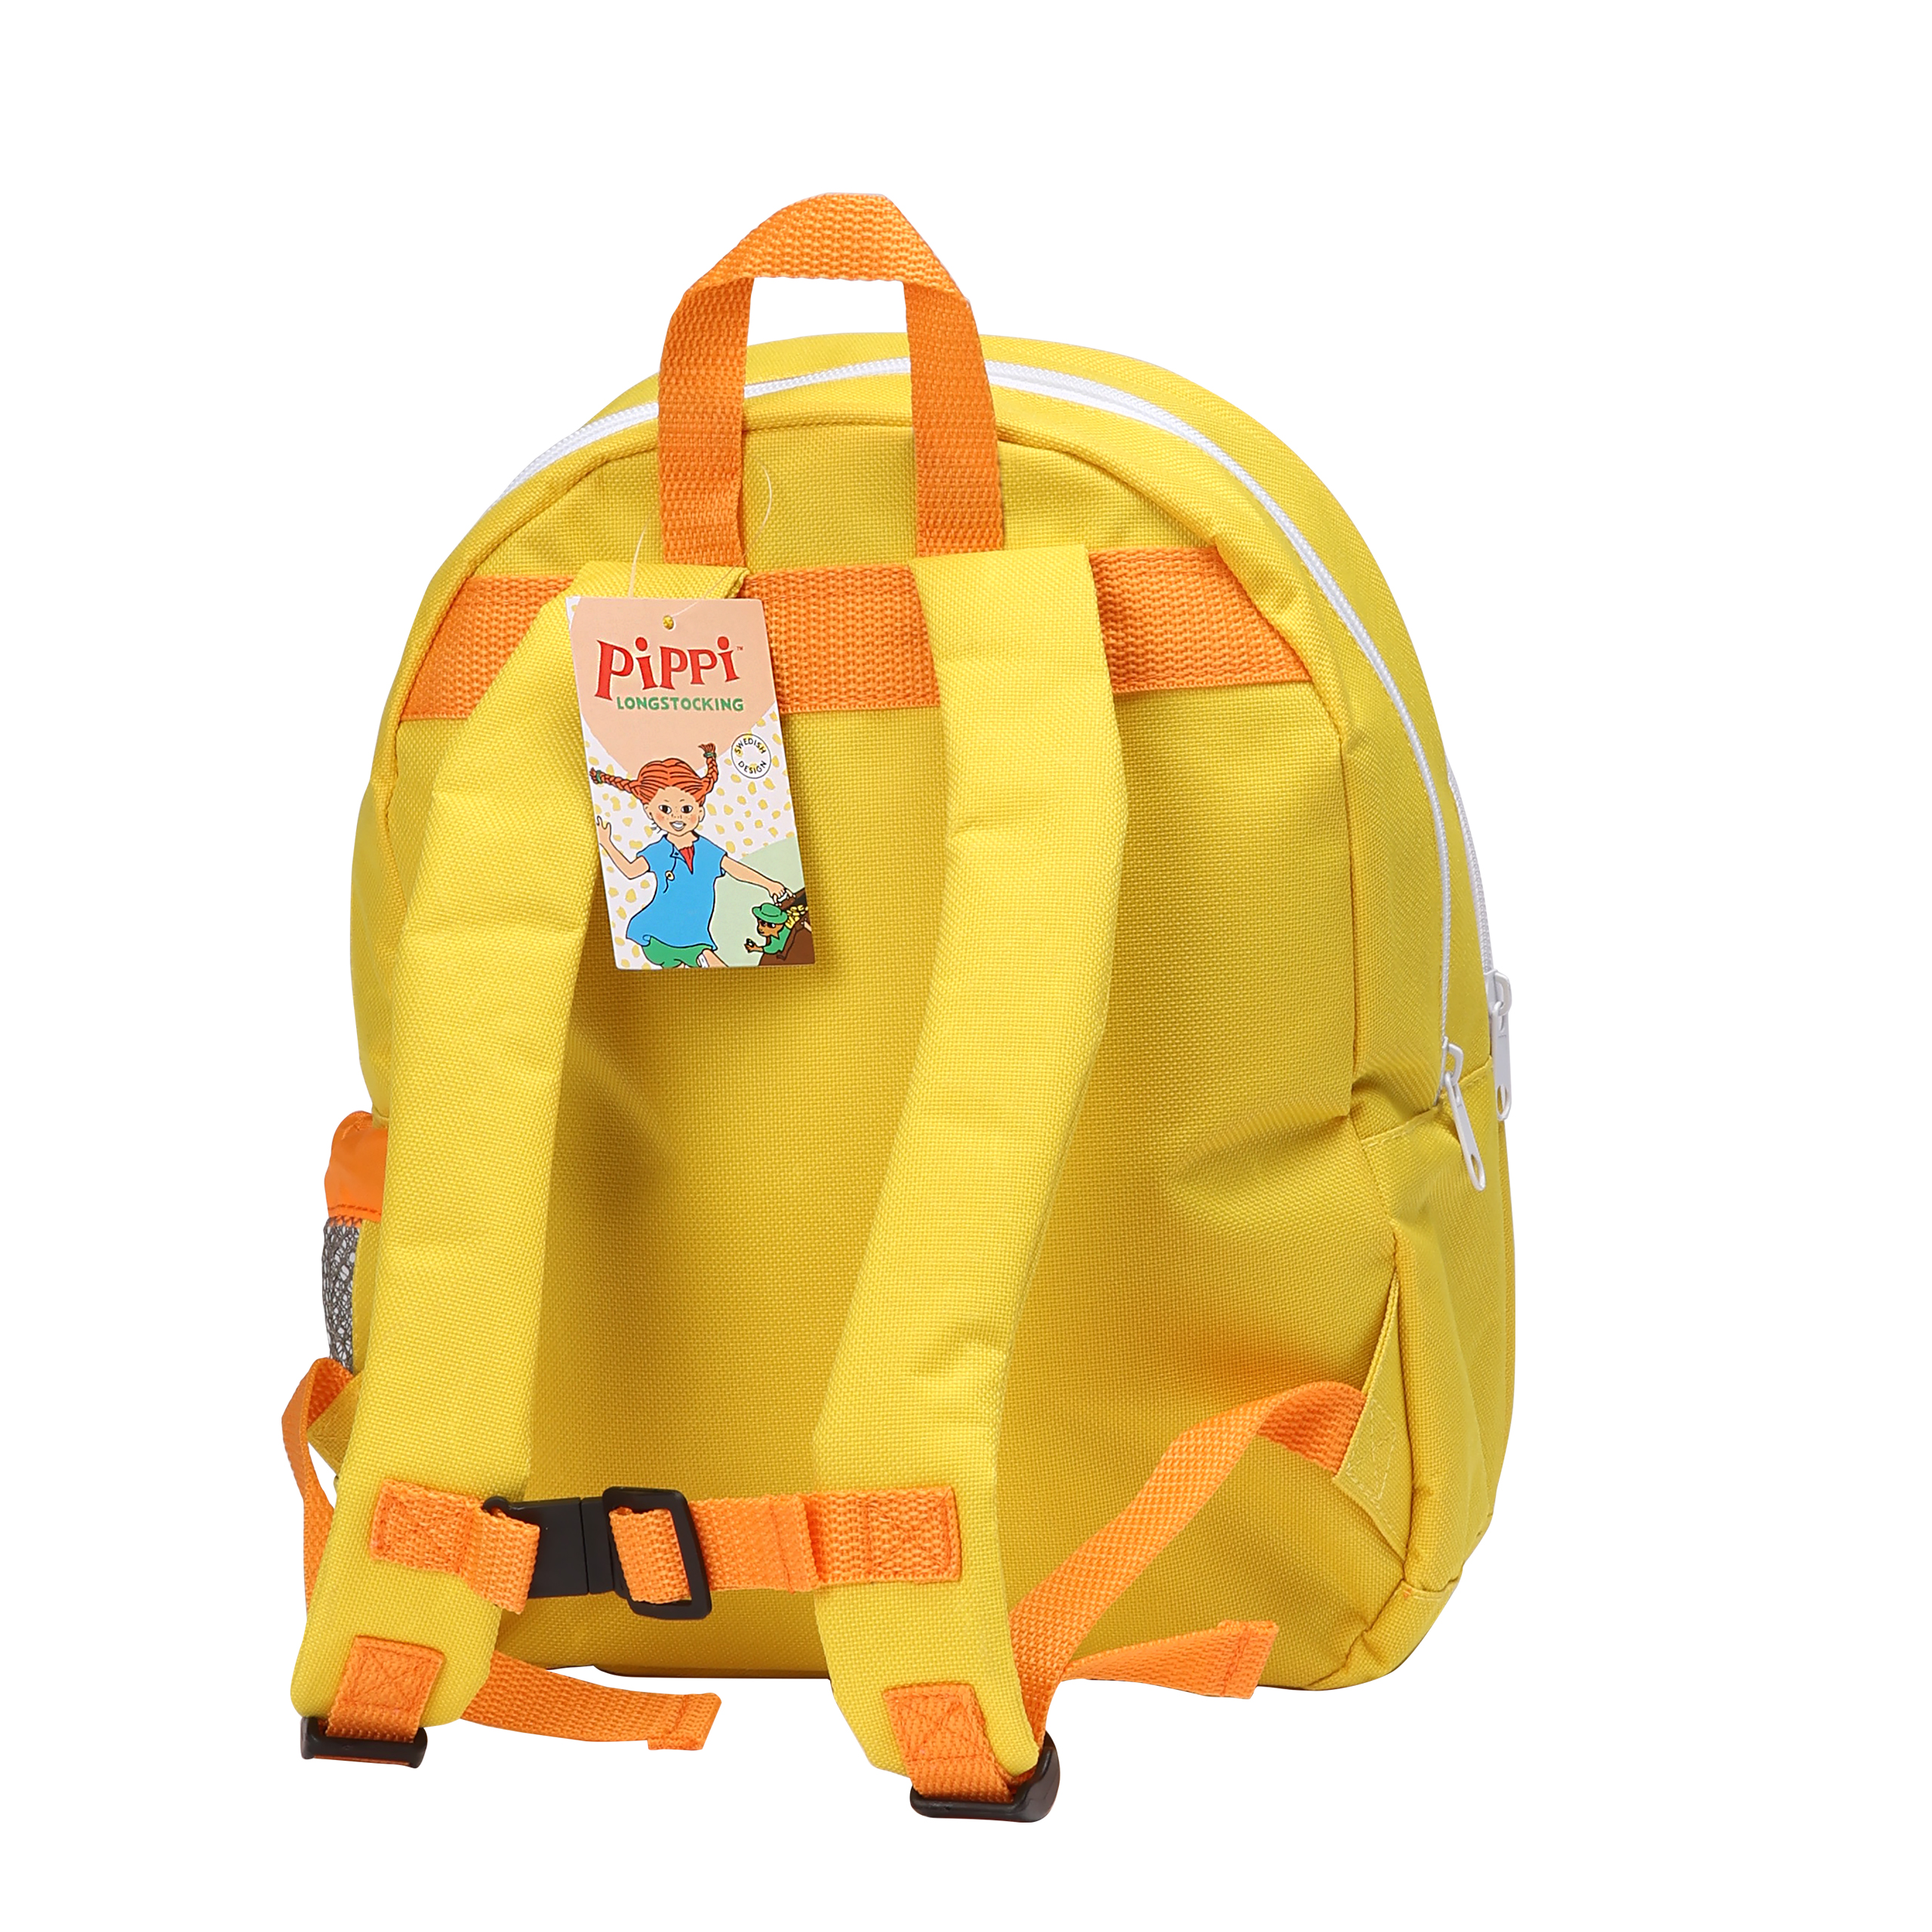 Pippi pippi børnetaske rygsæk gul